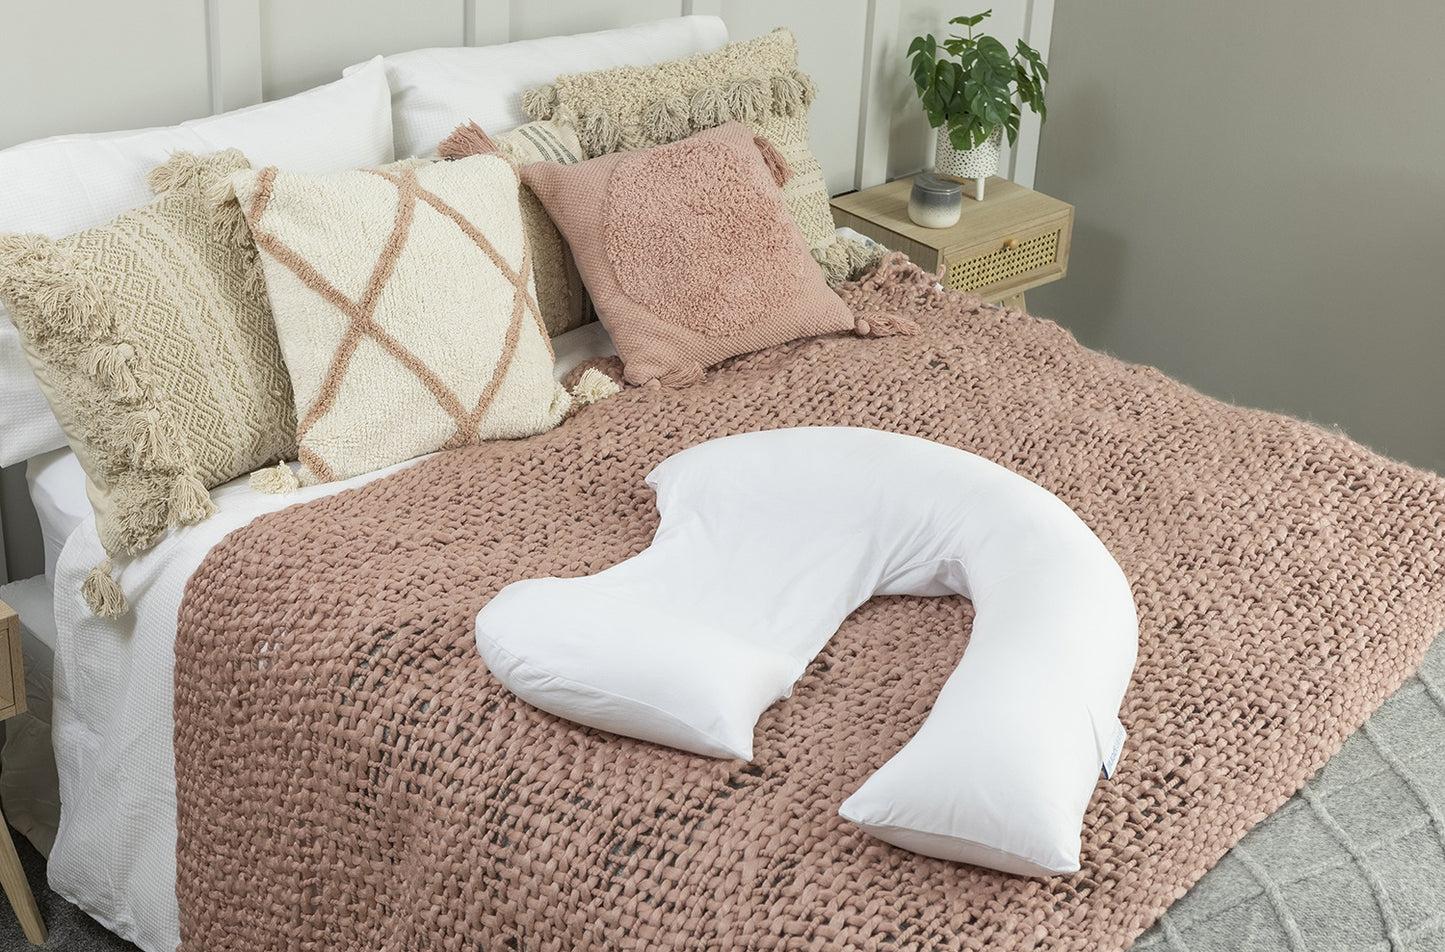 Dreamgenii Pregnancy, Support & Feeding Pillow (White)